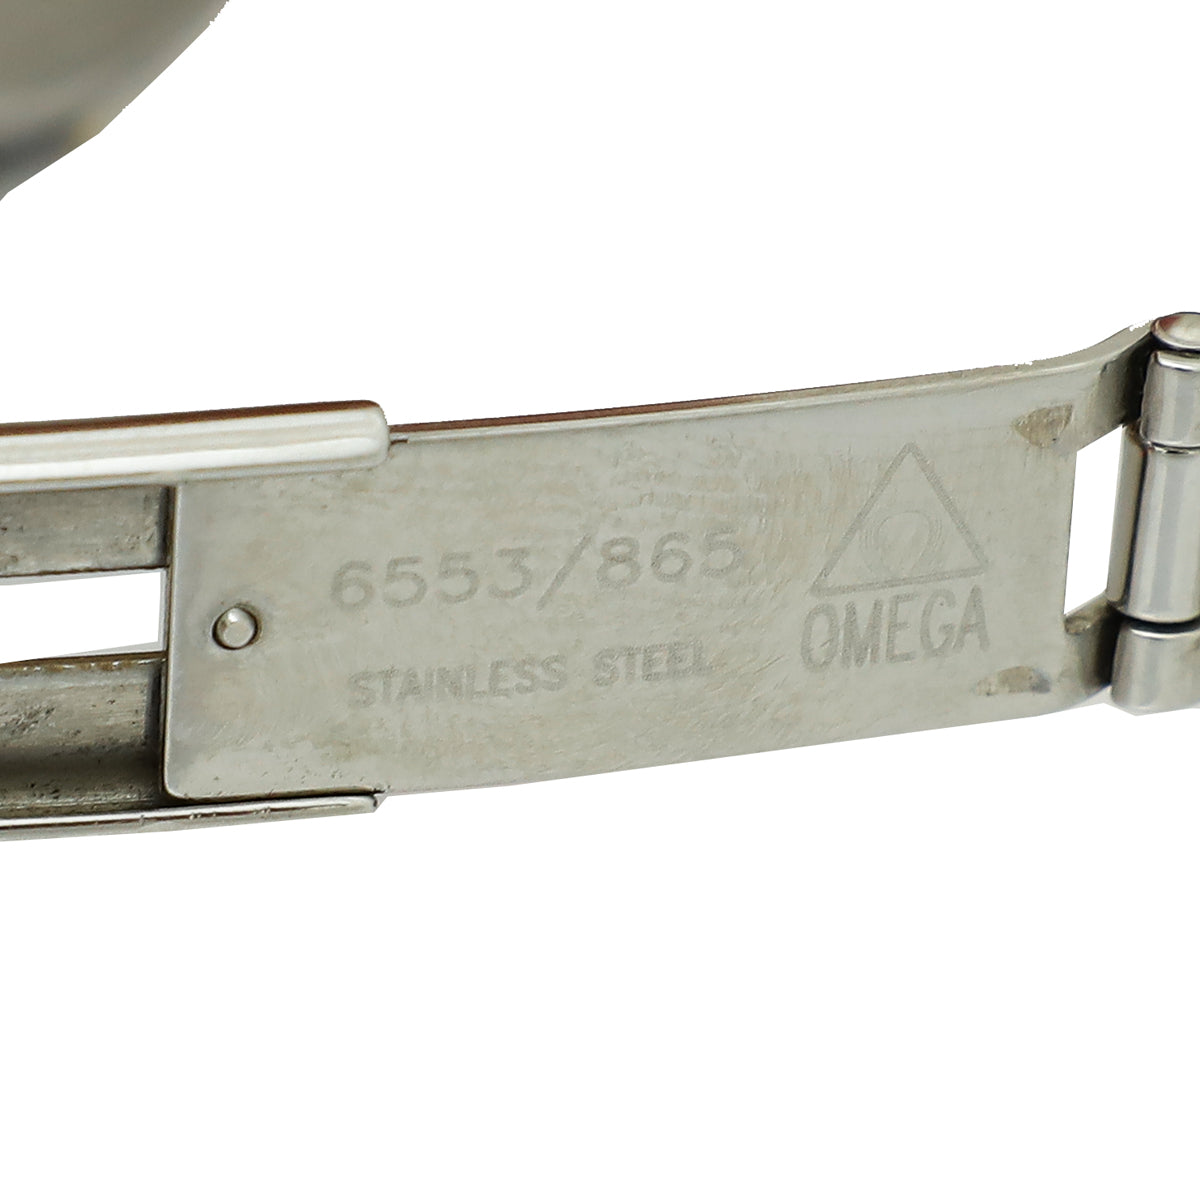 Omega 18K Yellow Gold Stainless Steel Diamond MOP Dial Constellation 22mm Quartz Watch